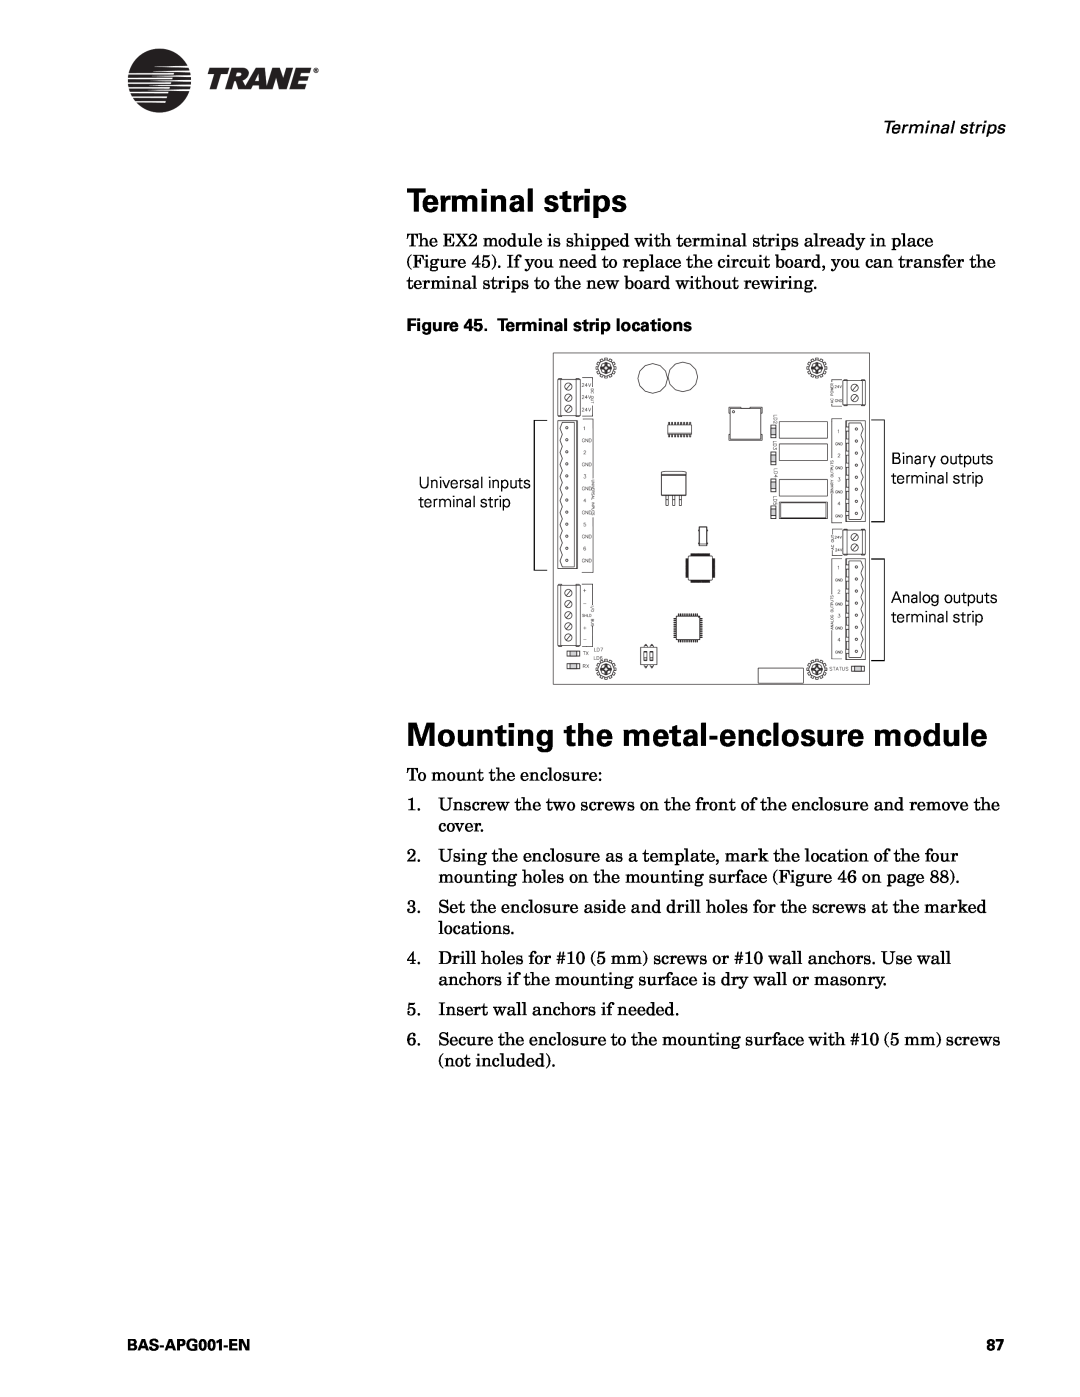 Trane Engineered Smoke Control System for Tracer Summit, BAS-APG001-EN Terminal strips, Mounting the metal-enclosuremodule 